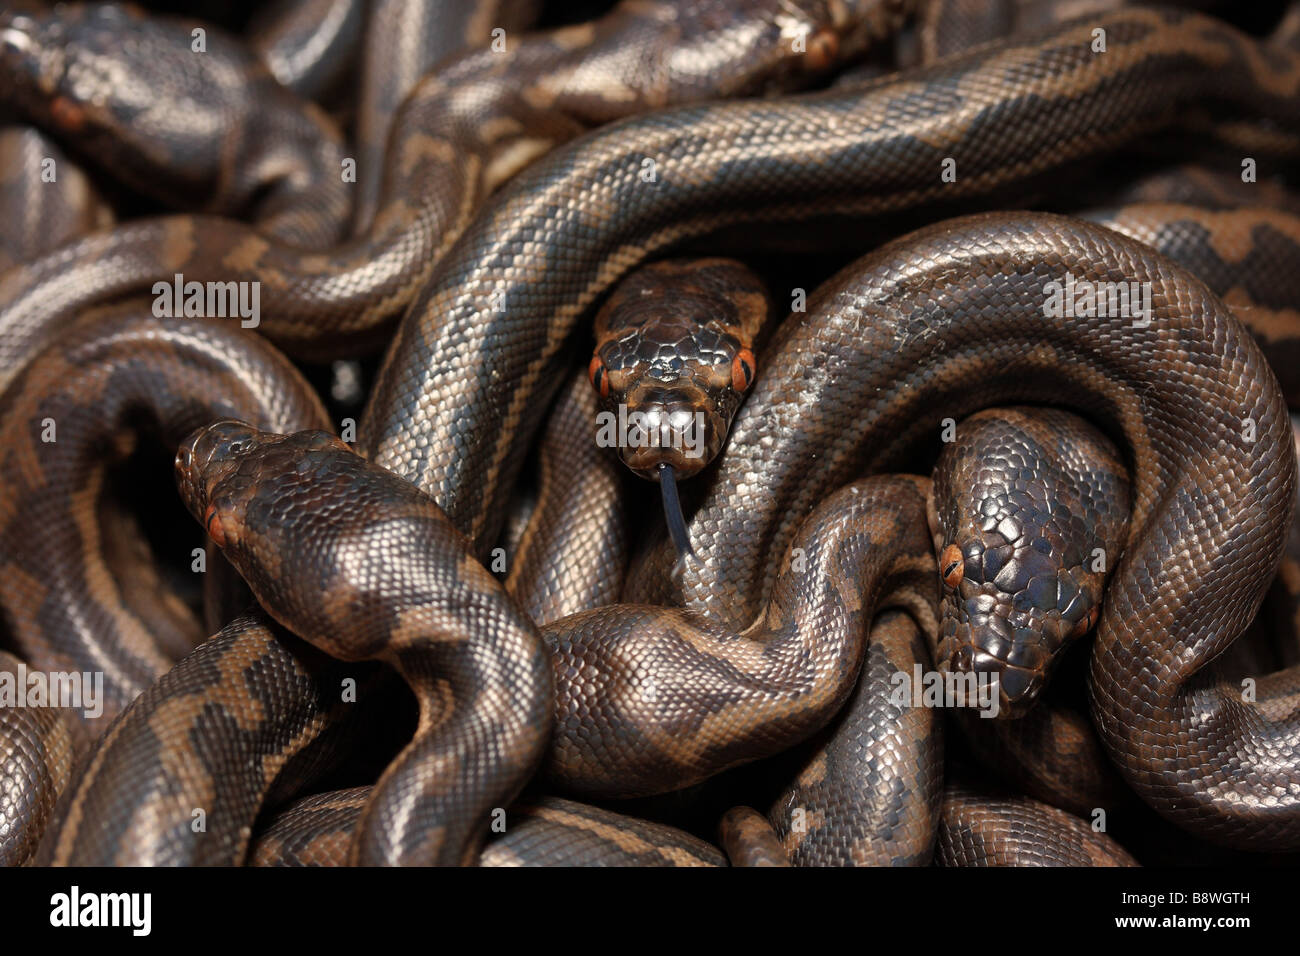 Australian Carpet Python hatchlings Stock Photo